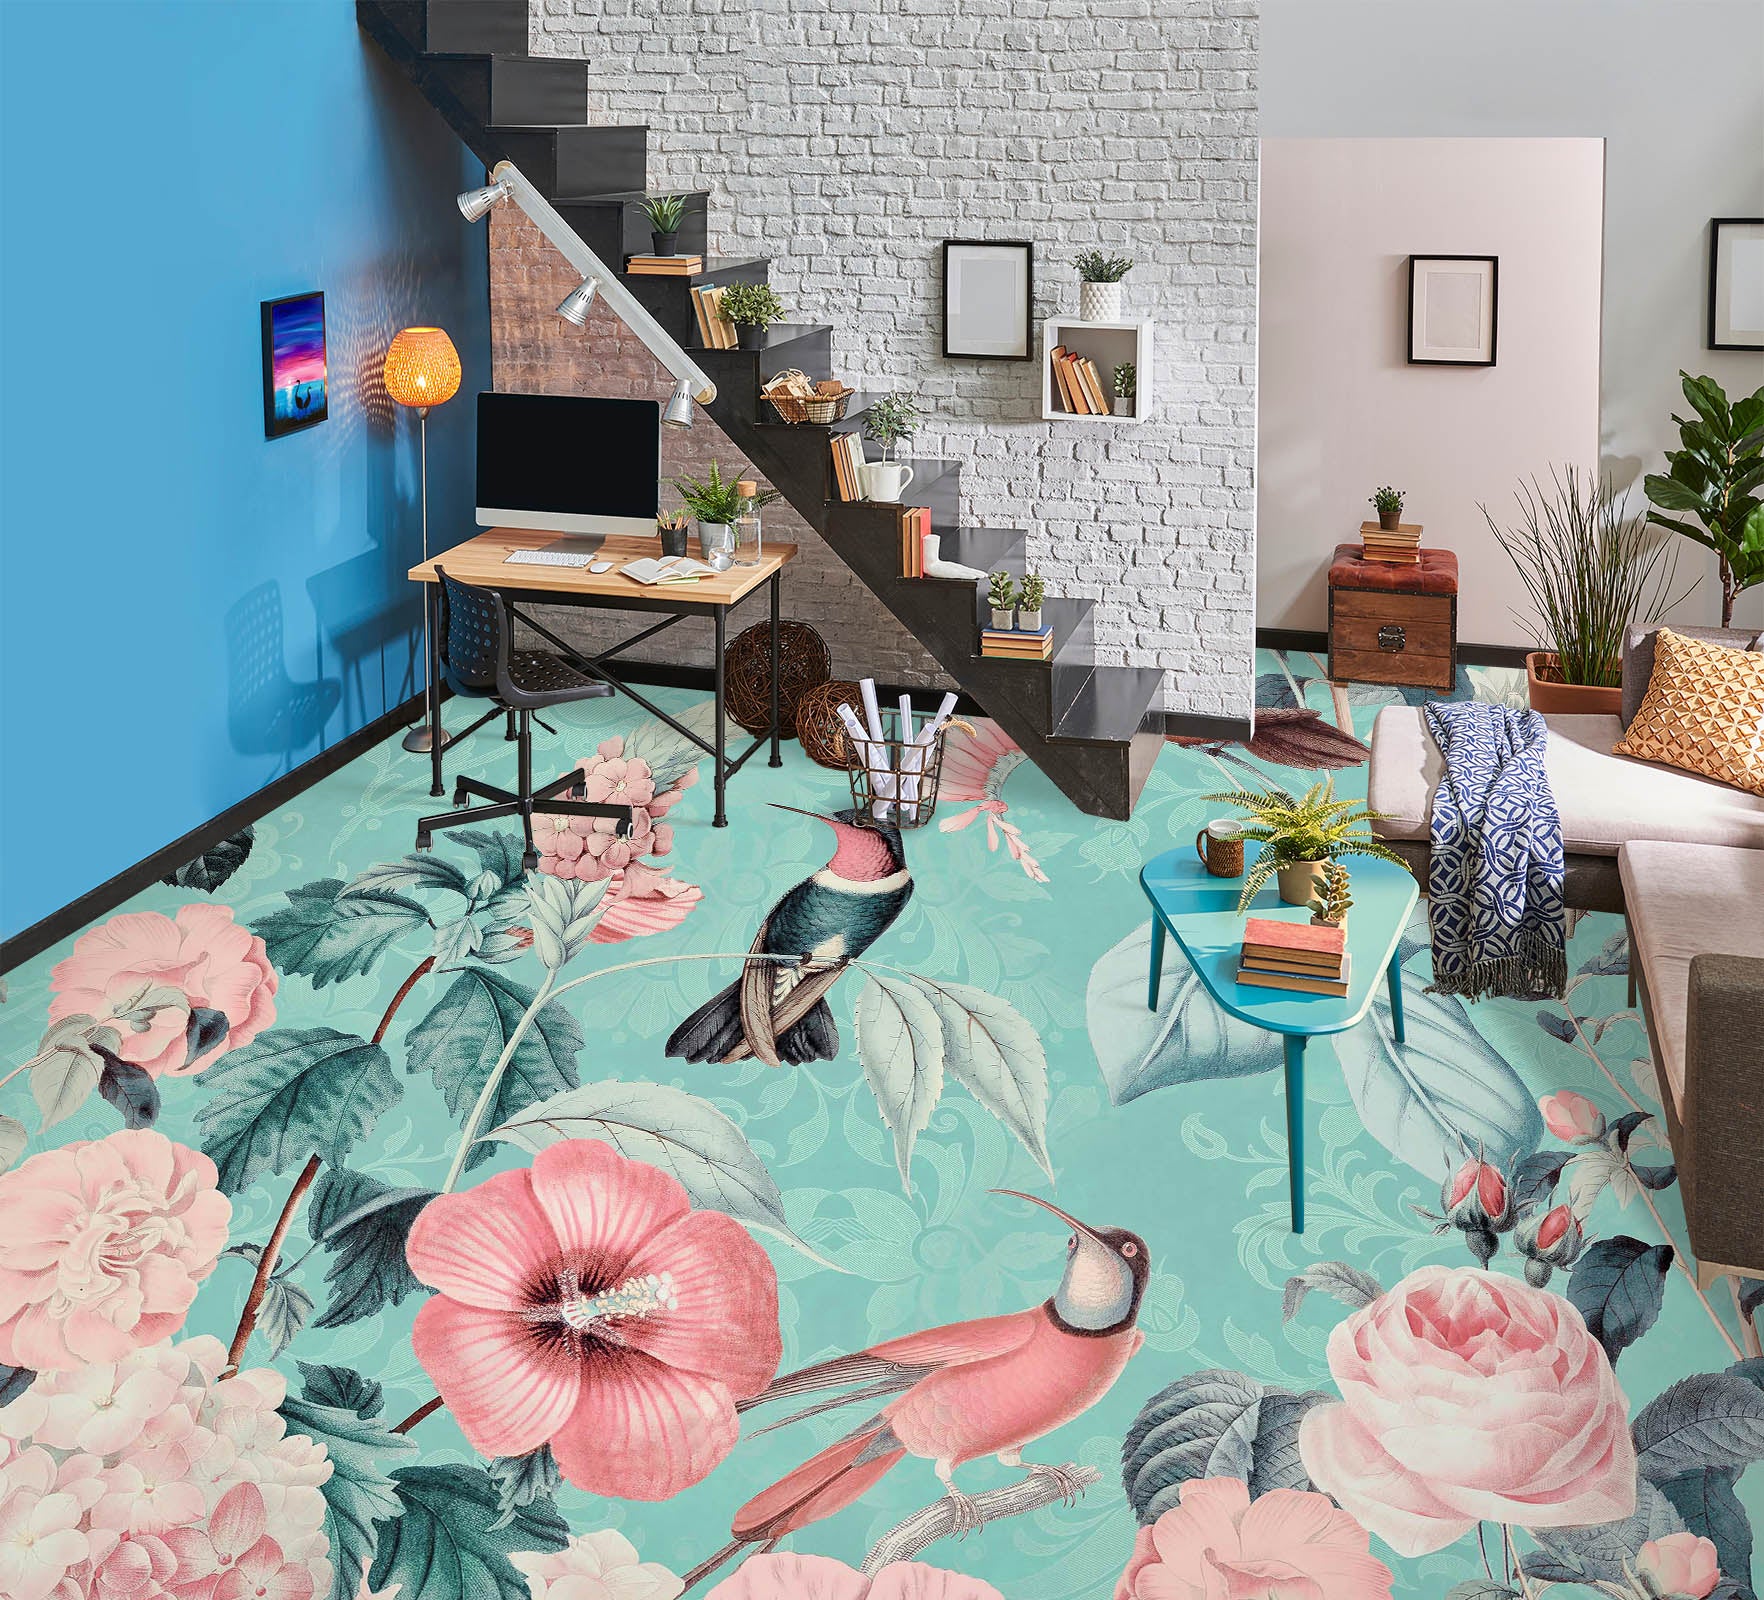 3D Bird Pink Flower 104154 Andrea Haase Floor Mural  Wallpaper Murals Self-Adhesive Removable Print Epoxy